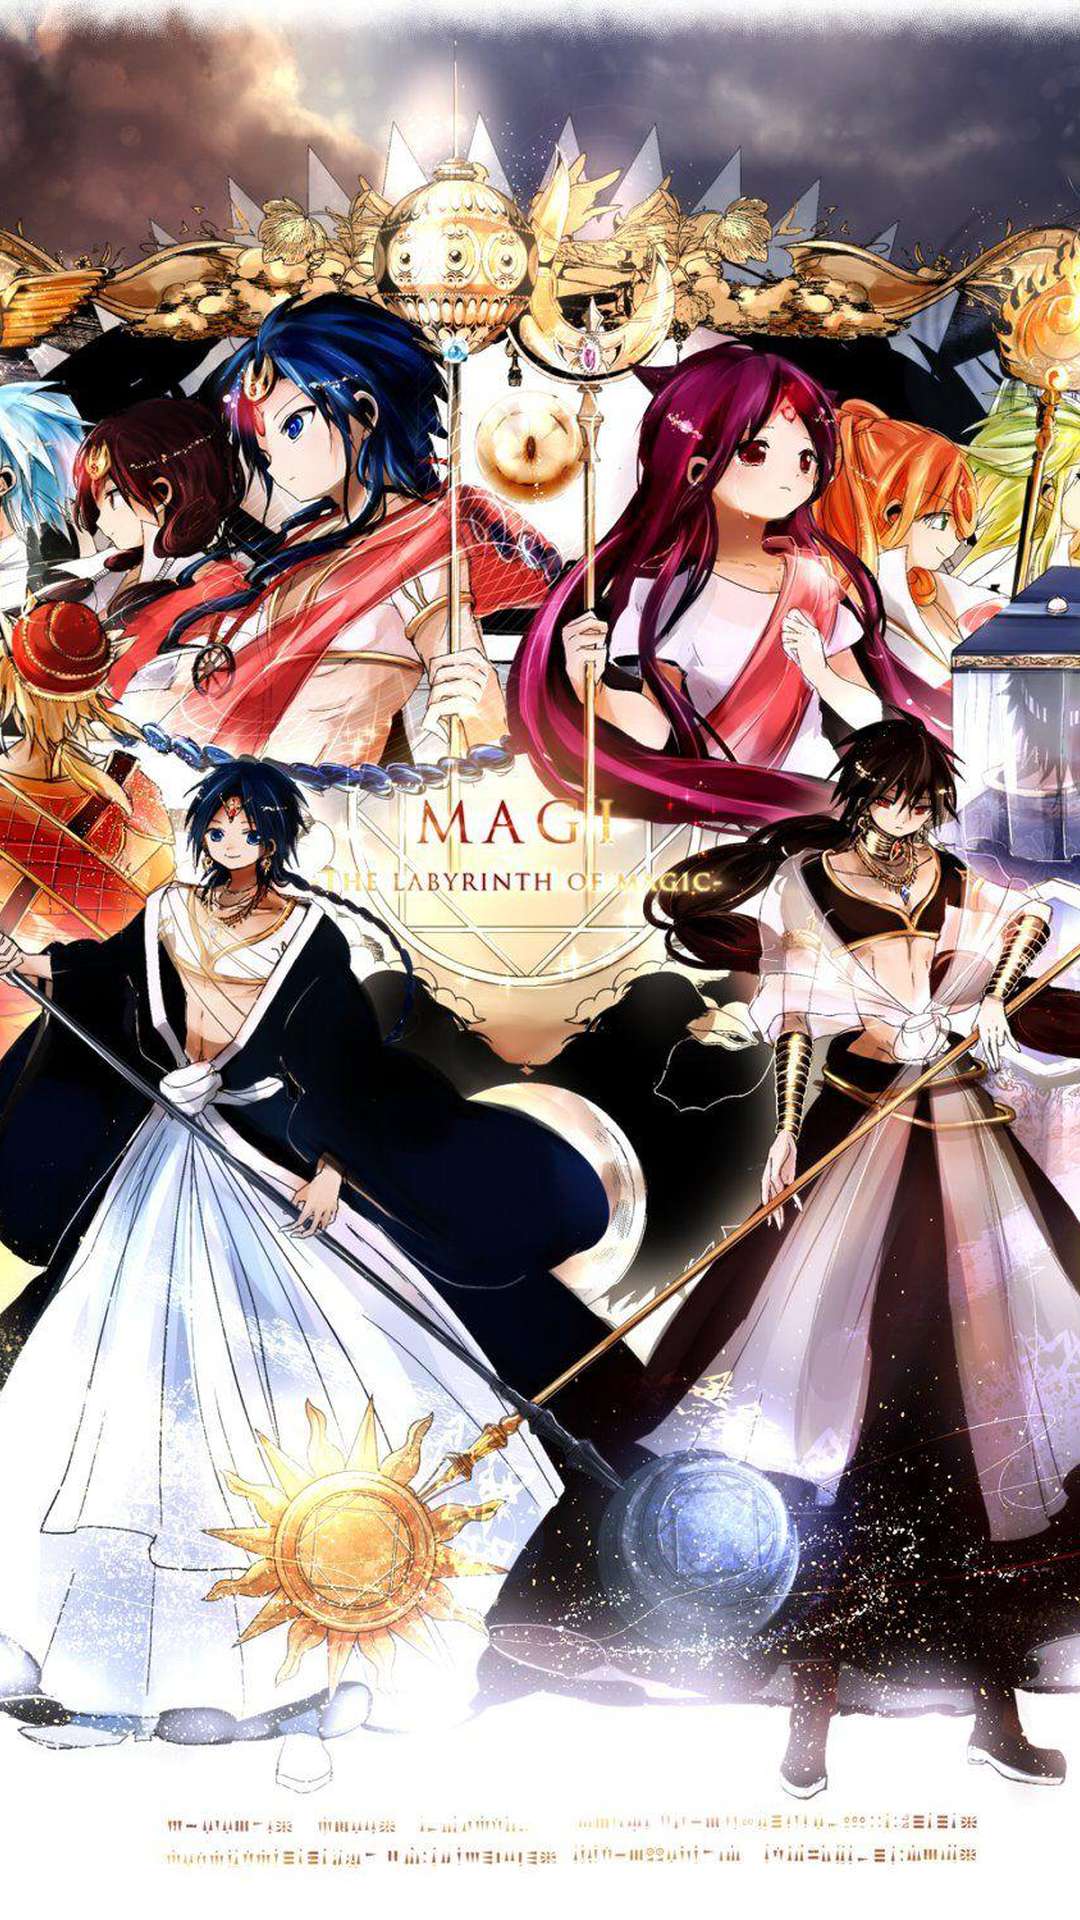 Magi Kingdom wallpaper by Ahkioz - Download on ZEDGE™